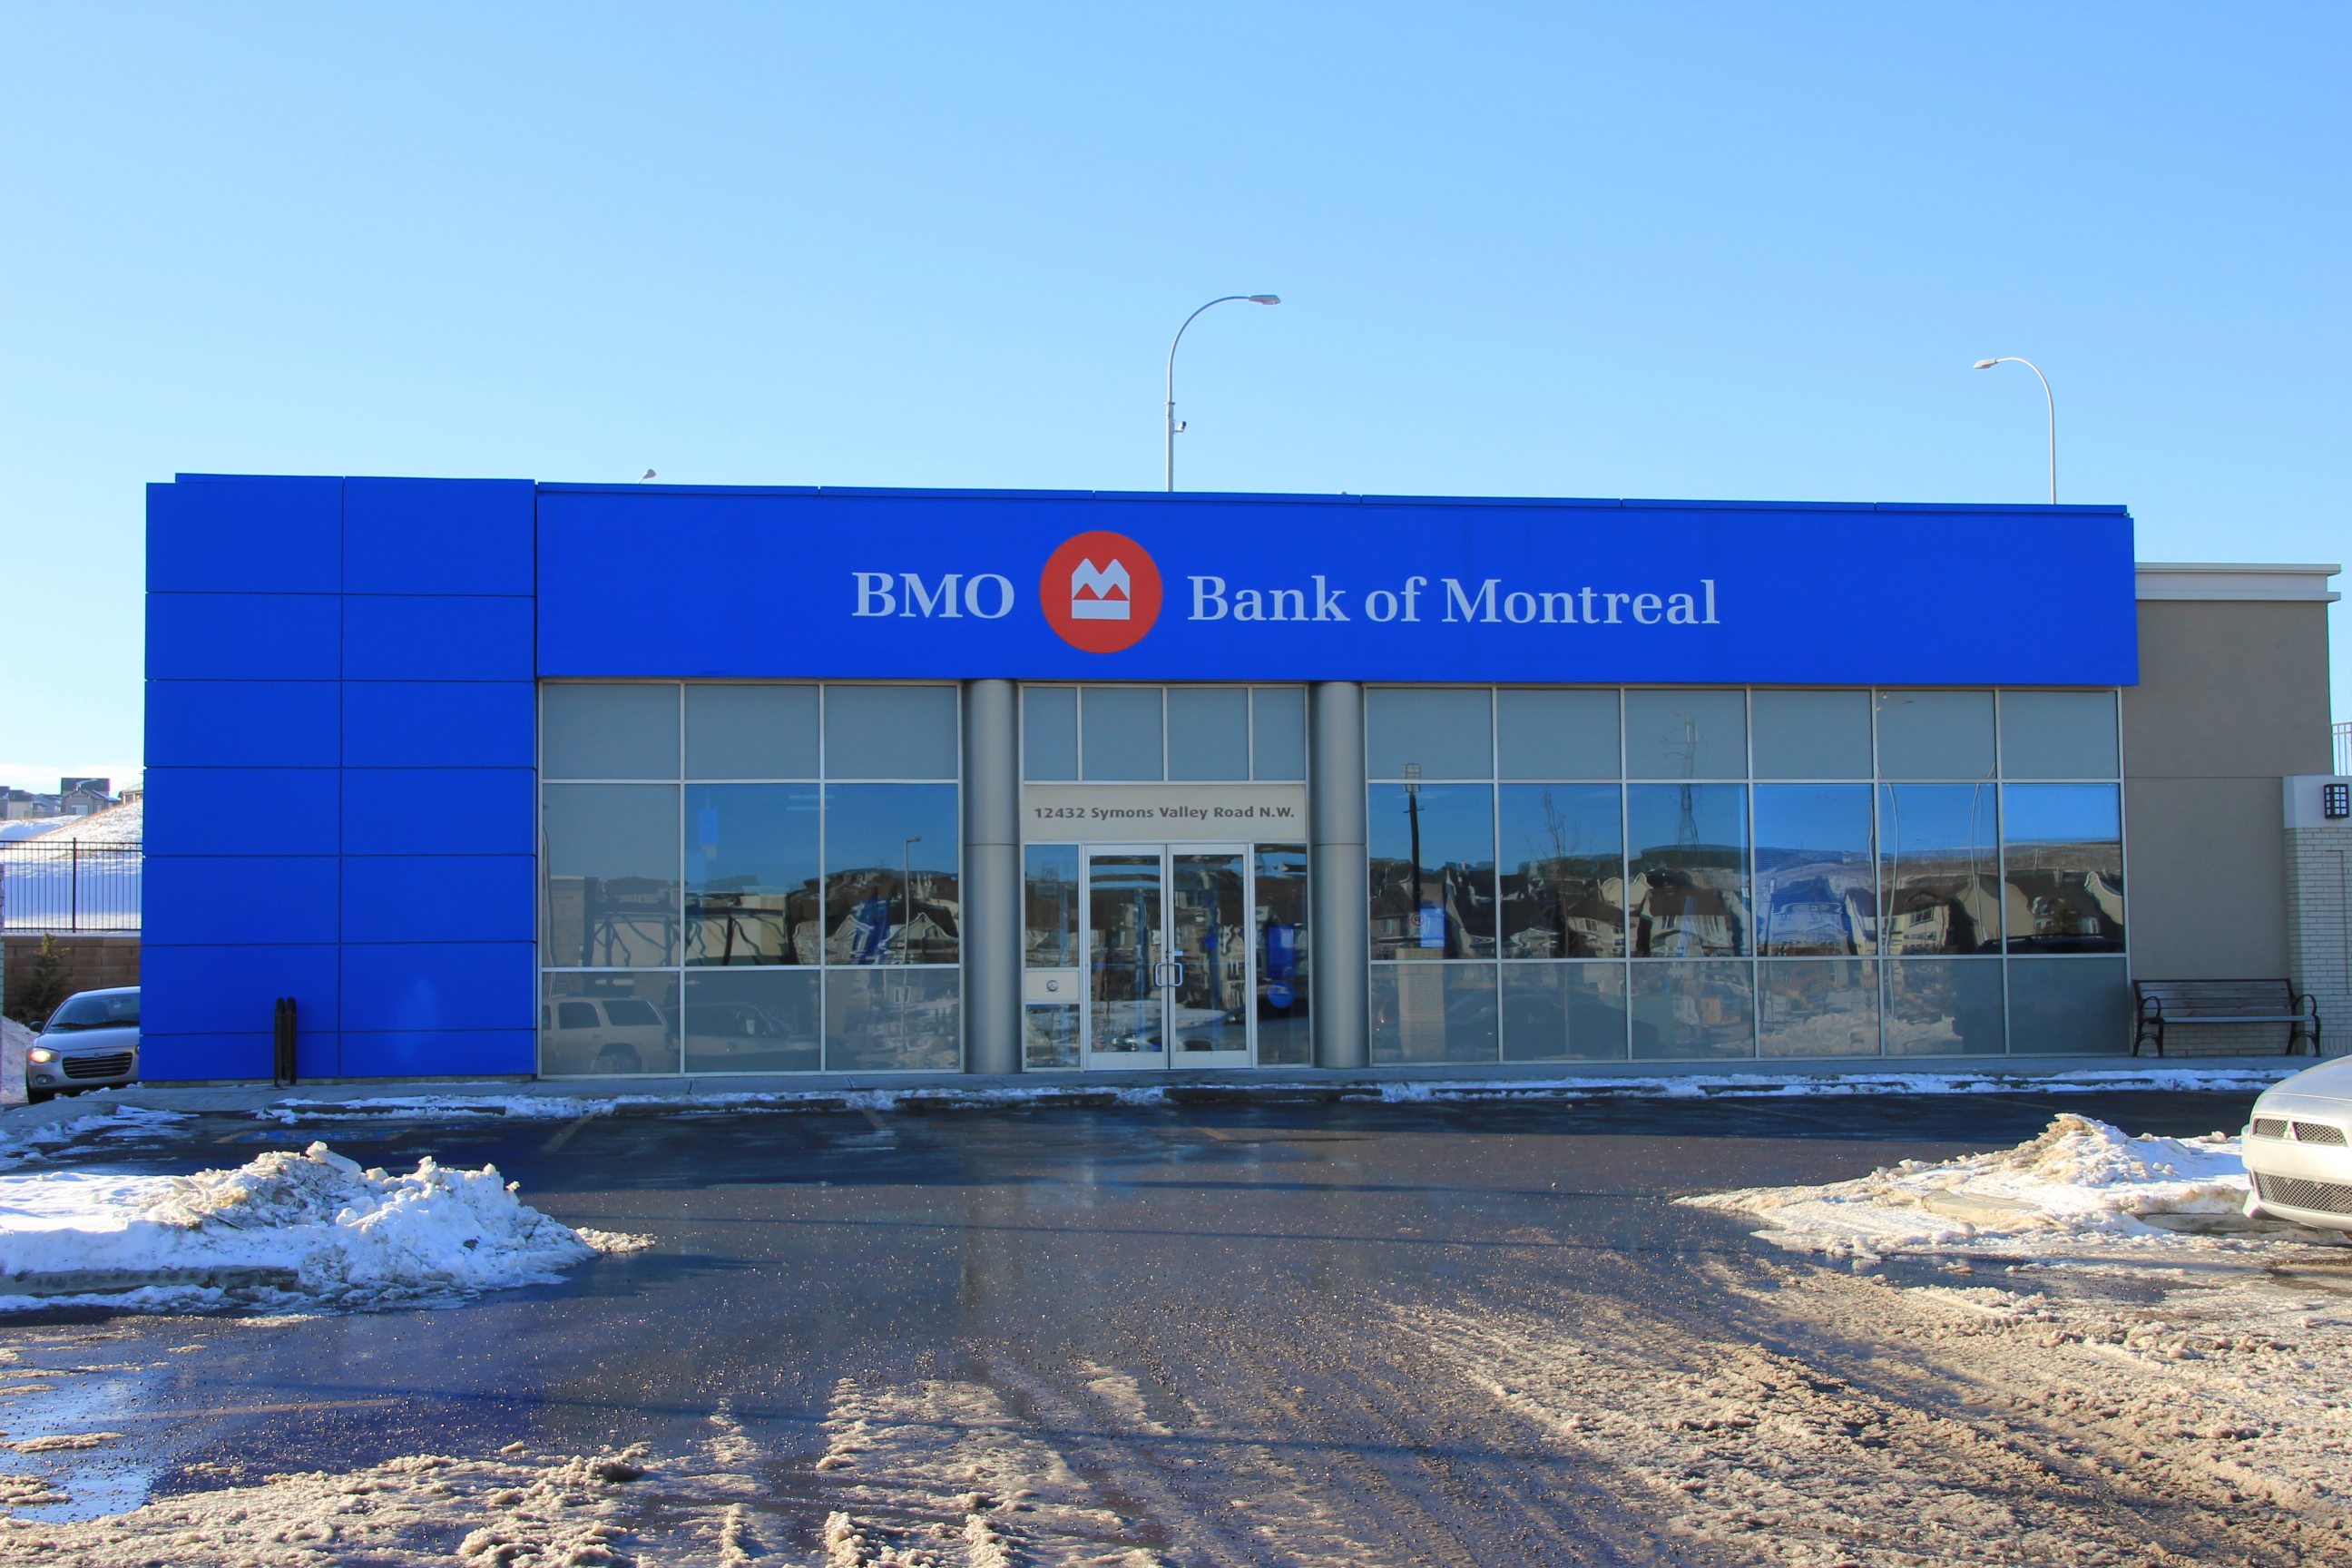 بانک مونترال,مونترال,کانادا,بانک در کانادا,بانک مونترال کانادا,بزرگترین بانک کانادا,قدیمی ترین بانک در کانادا